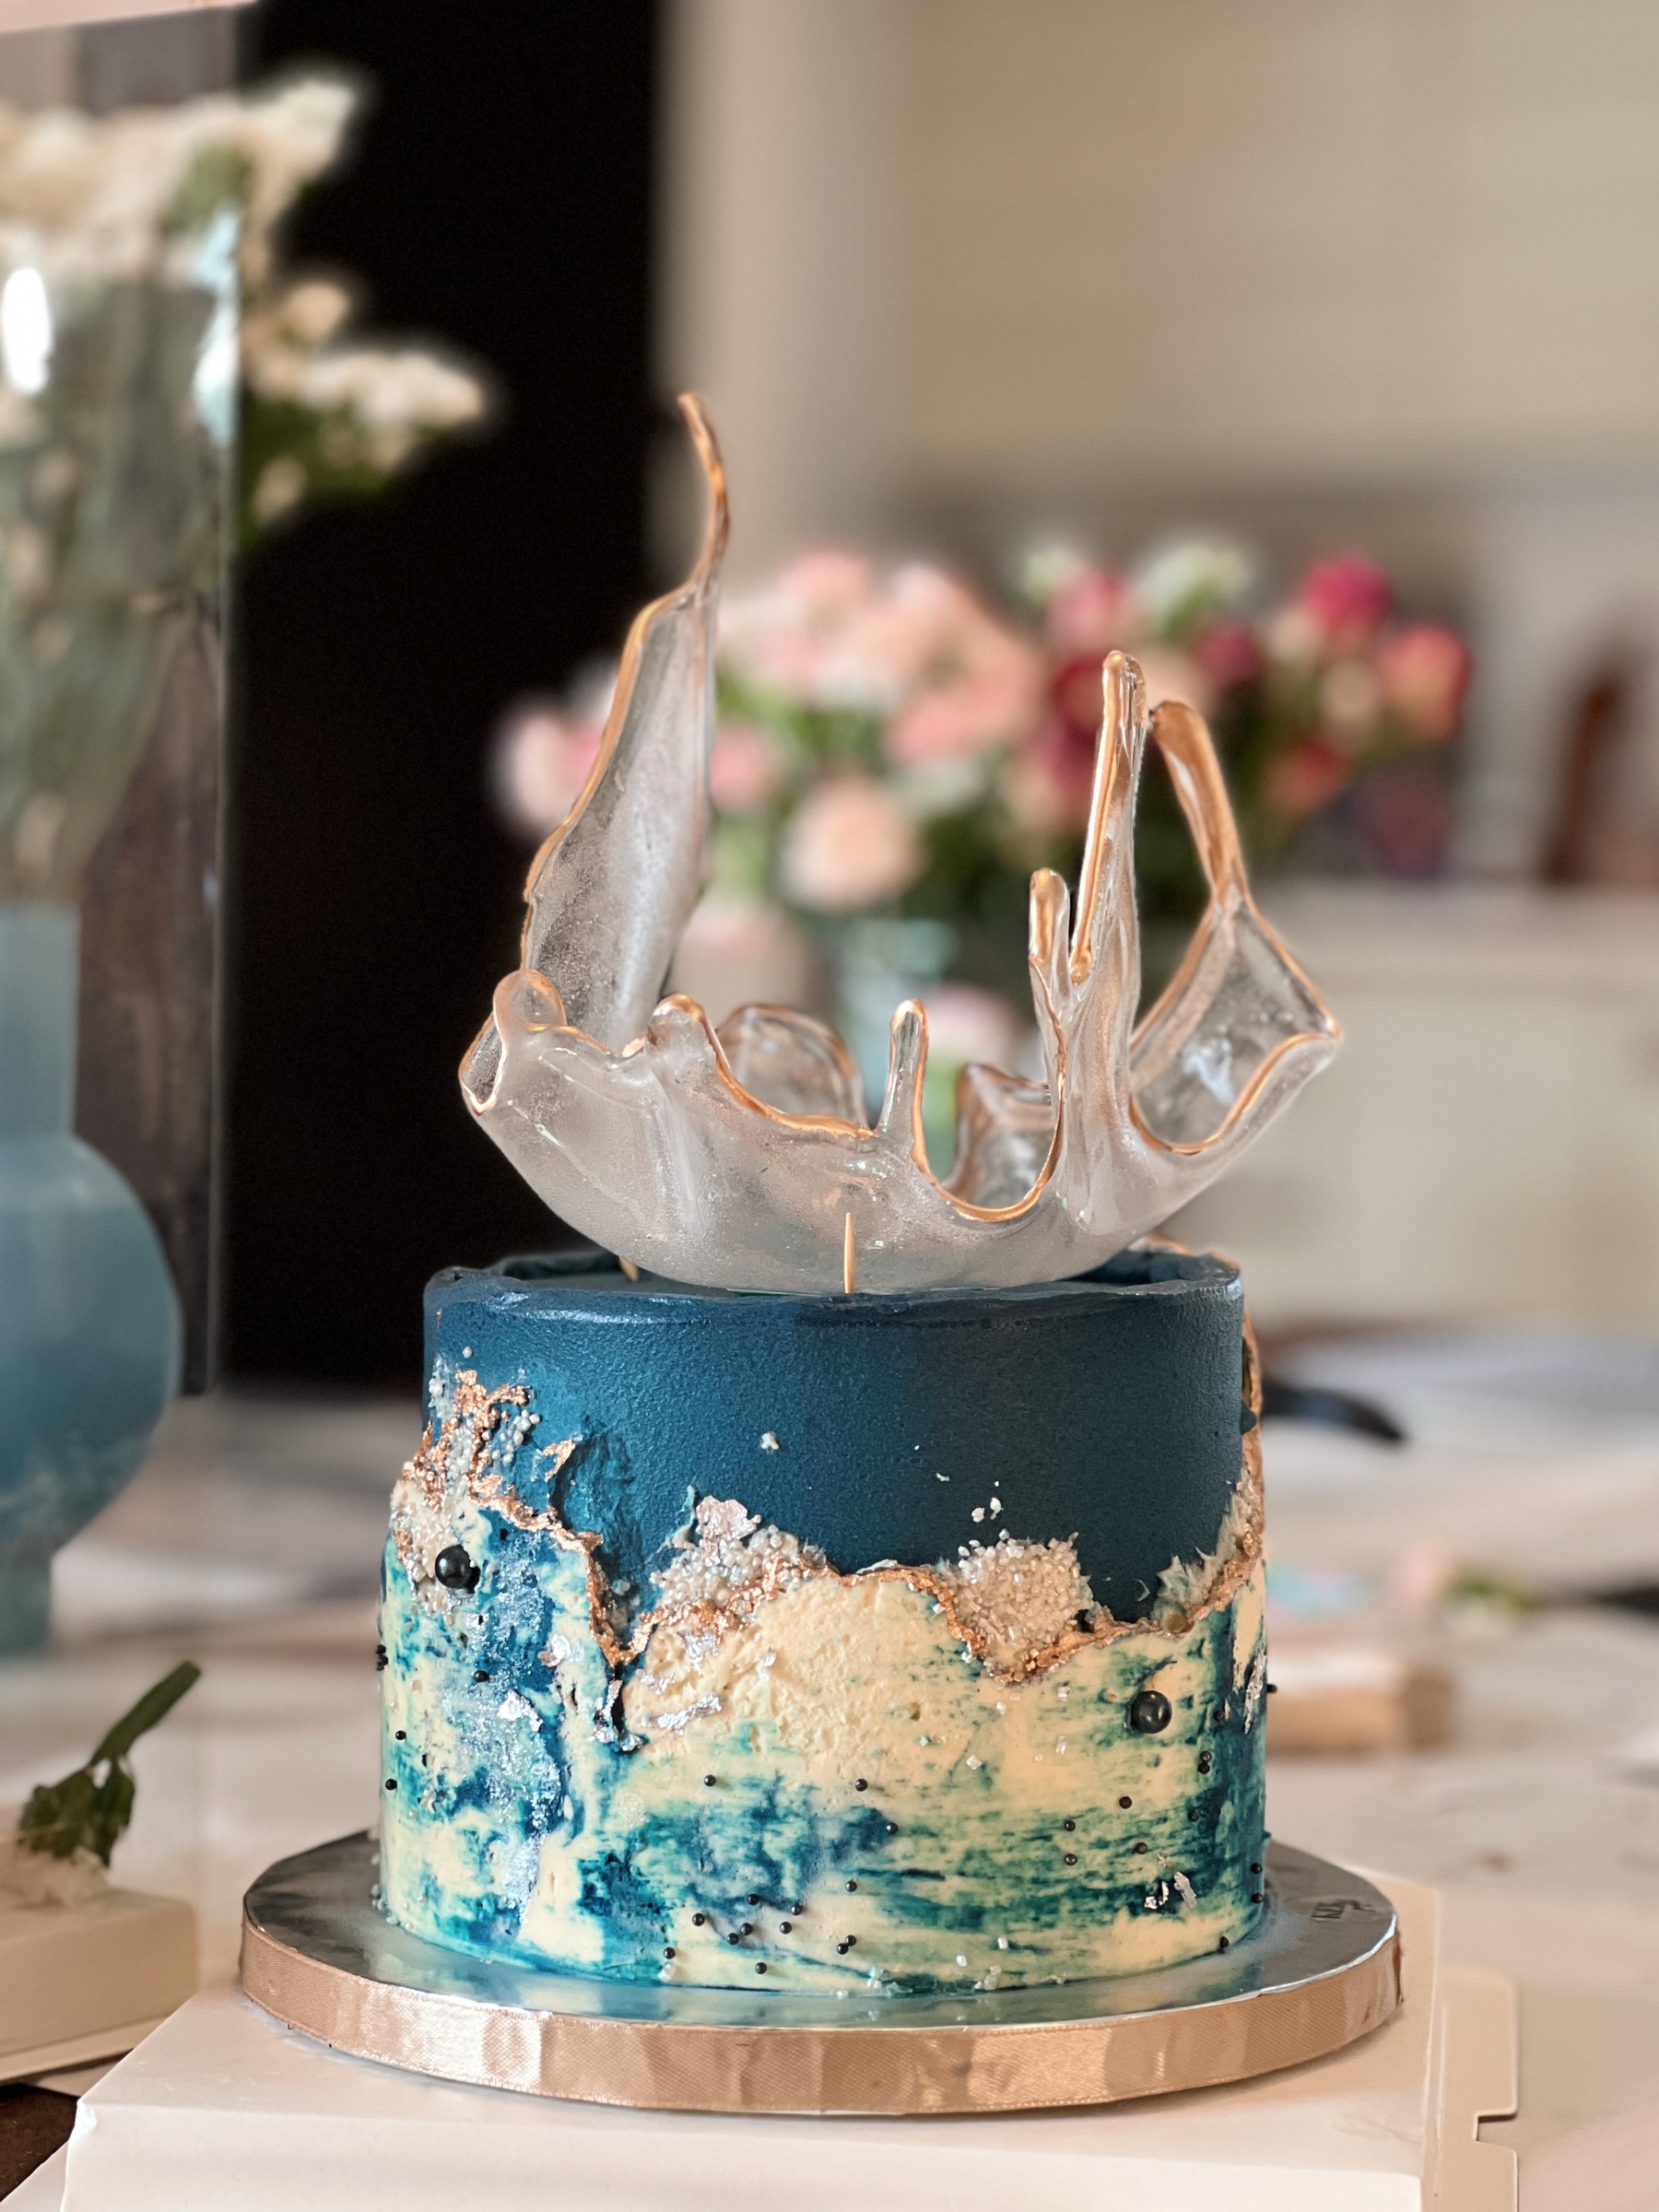 Simple cake decoration with isomalt - DIY by Søstrene Grene - YouTube